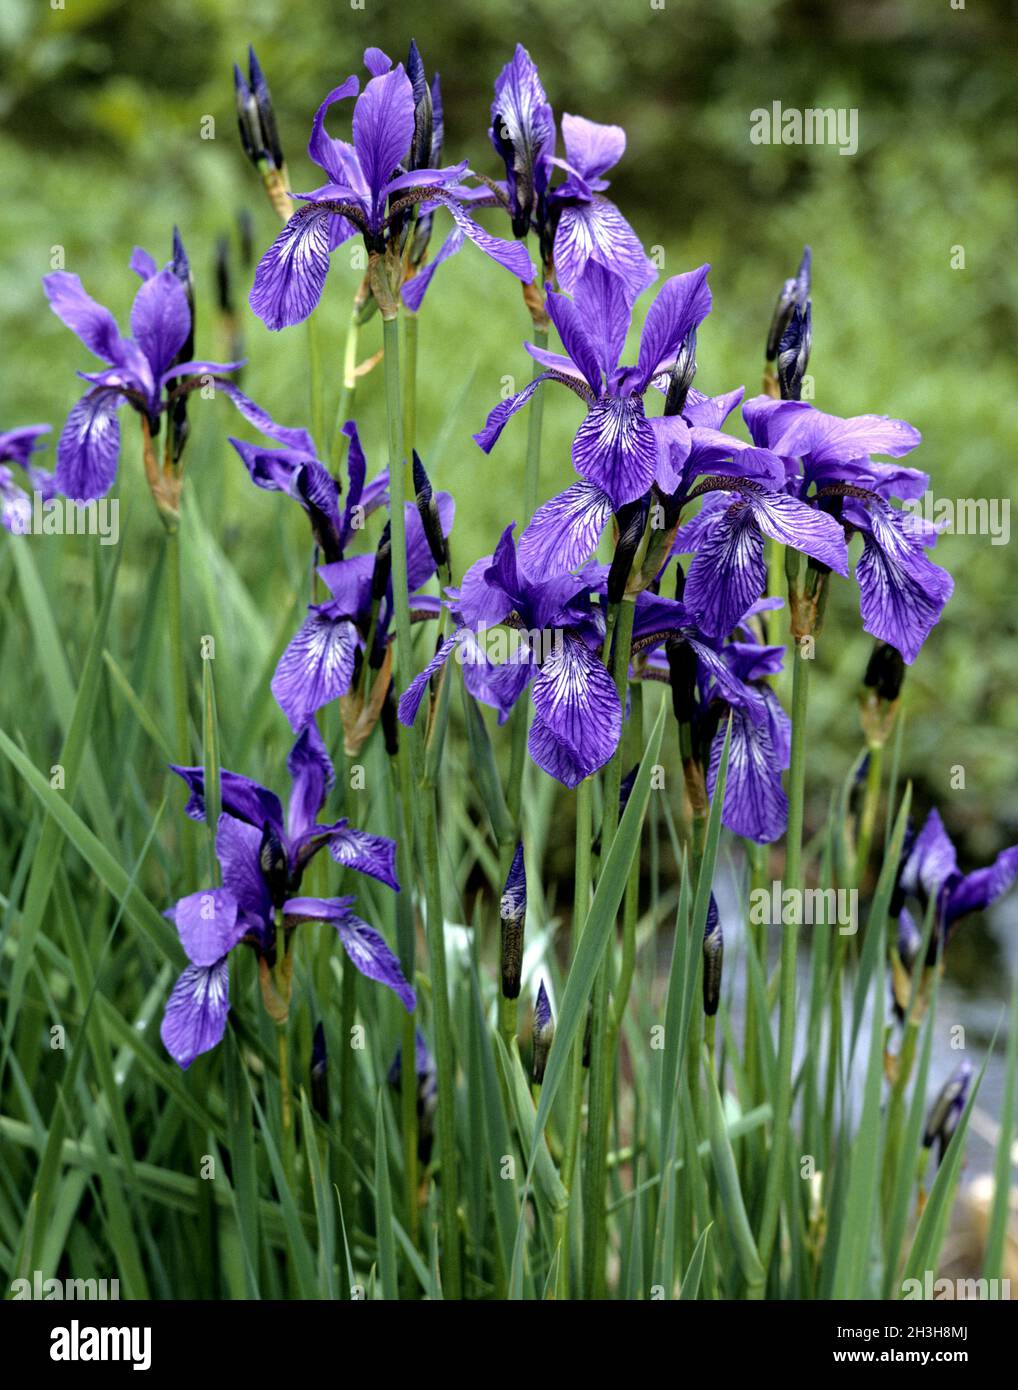 Siberian iris Stock Photo - Alamy